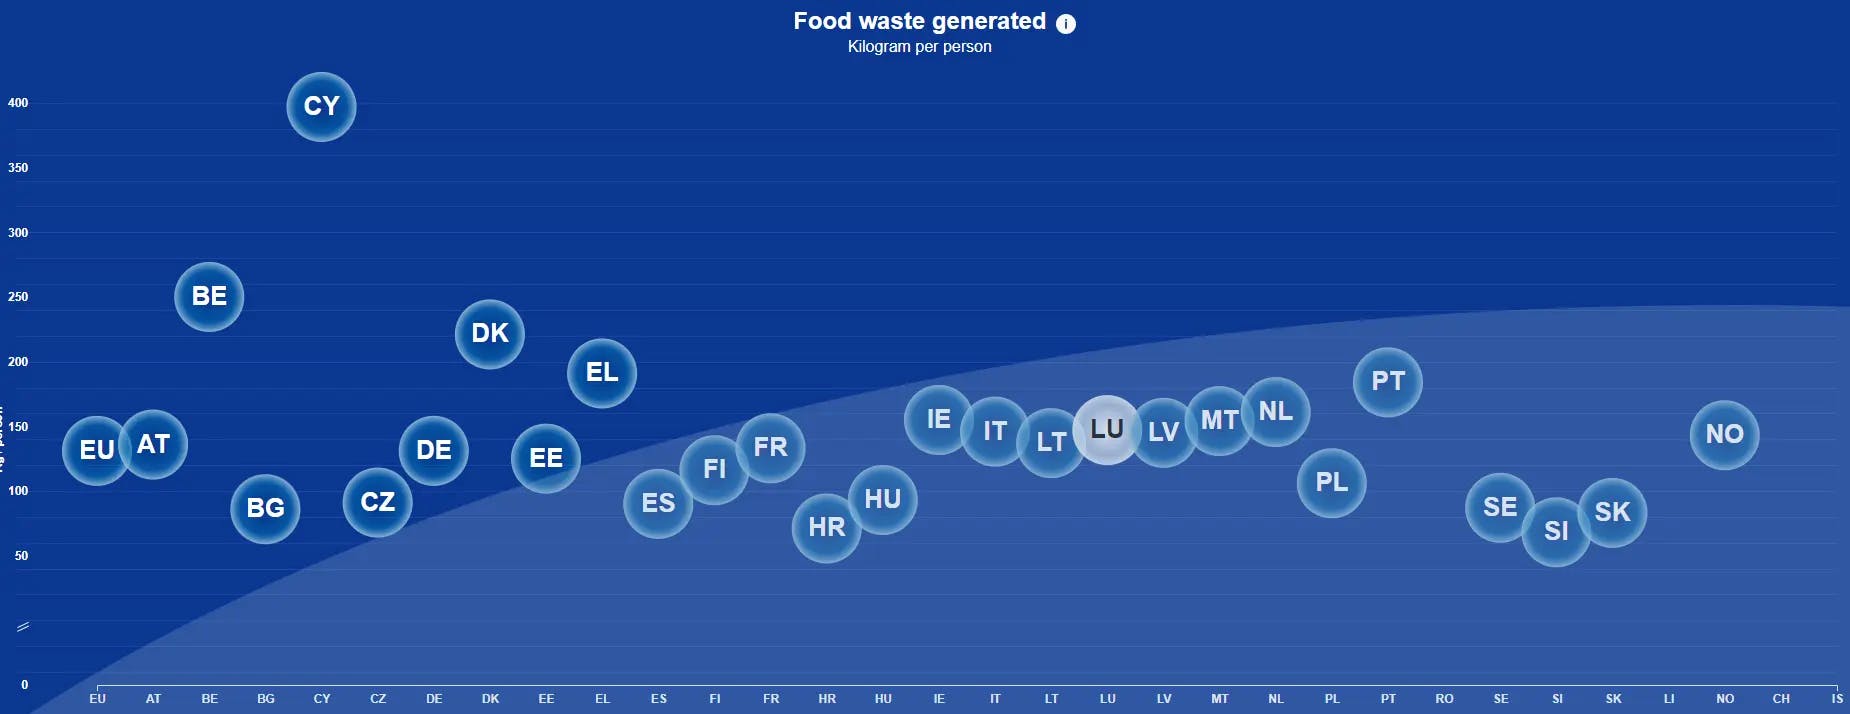 Food waste generated in EU